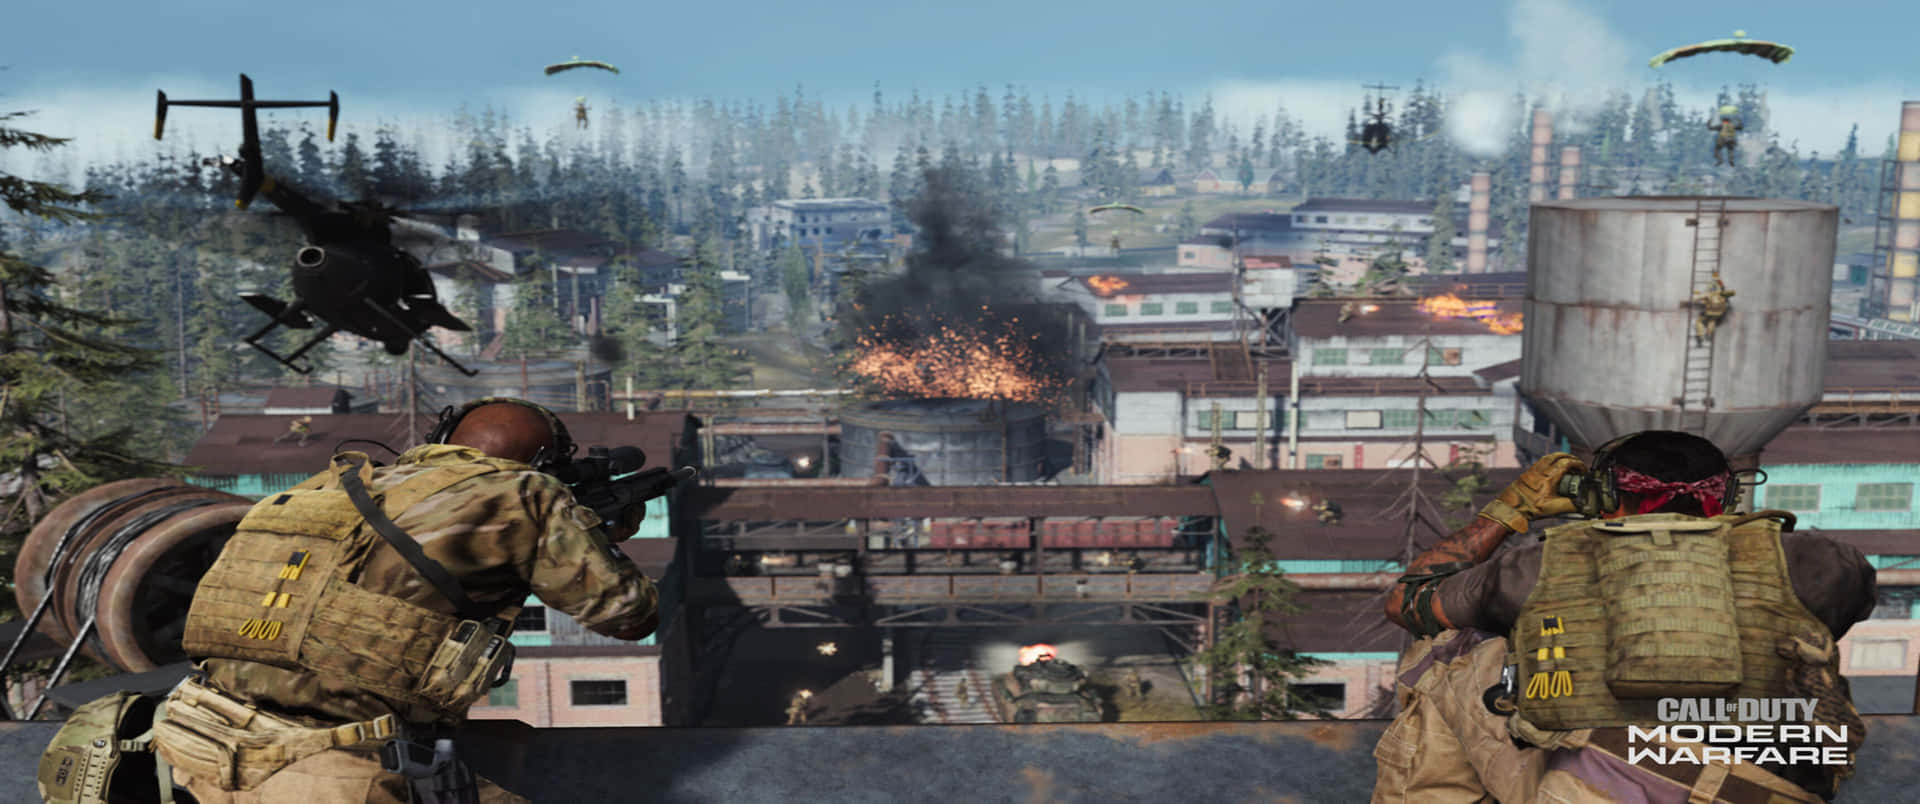 Soldatiin Zona Di Guerra 3440x1440p Sfondo Call Of Duty Modern Warfare